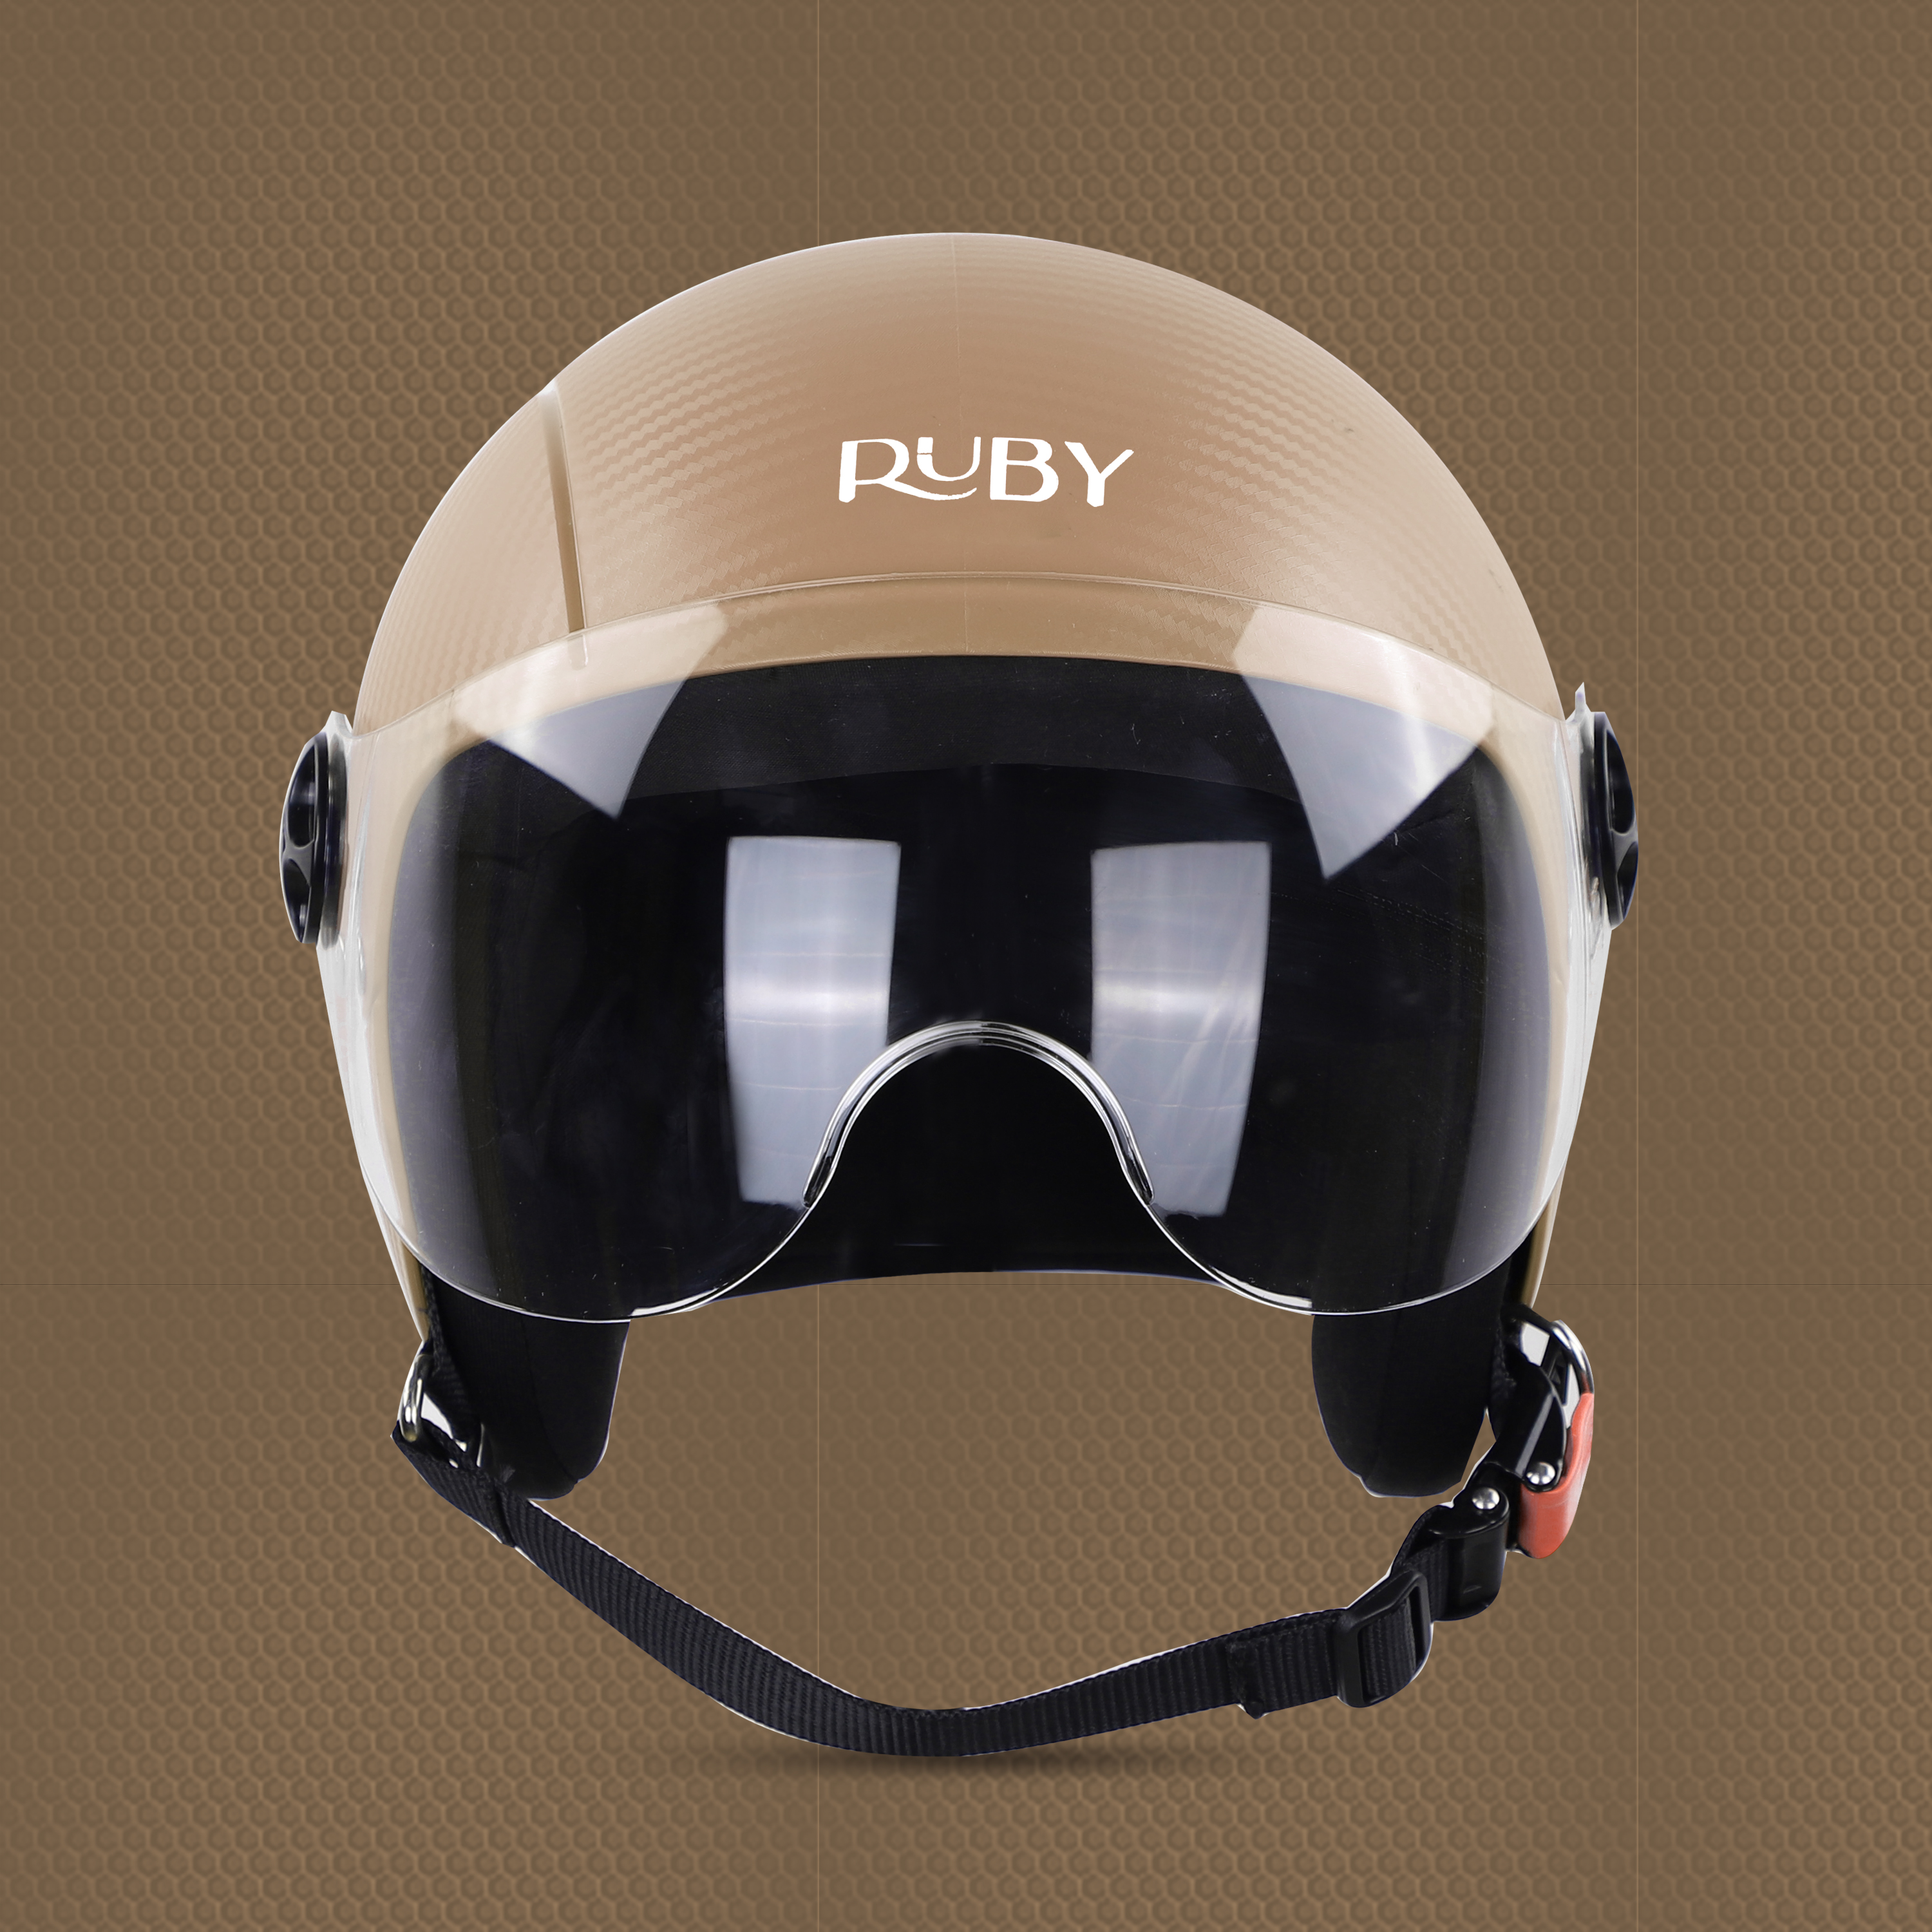 Steelbird SBH-16 Ruby ISI Certified Open Face Helmet (Dashing Desert Storm With Clear Visor)